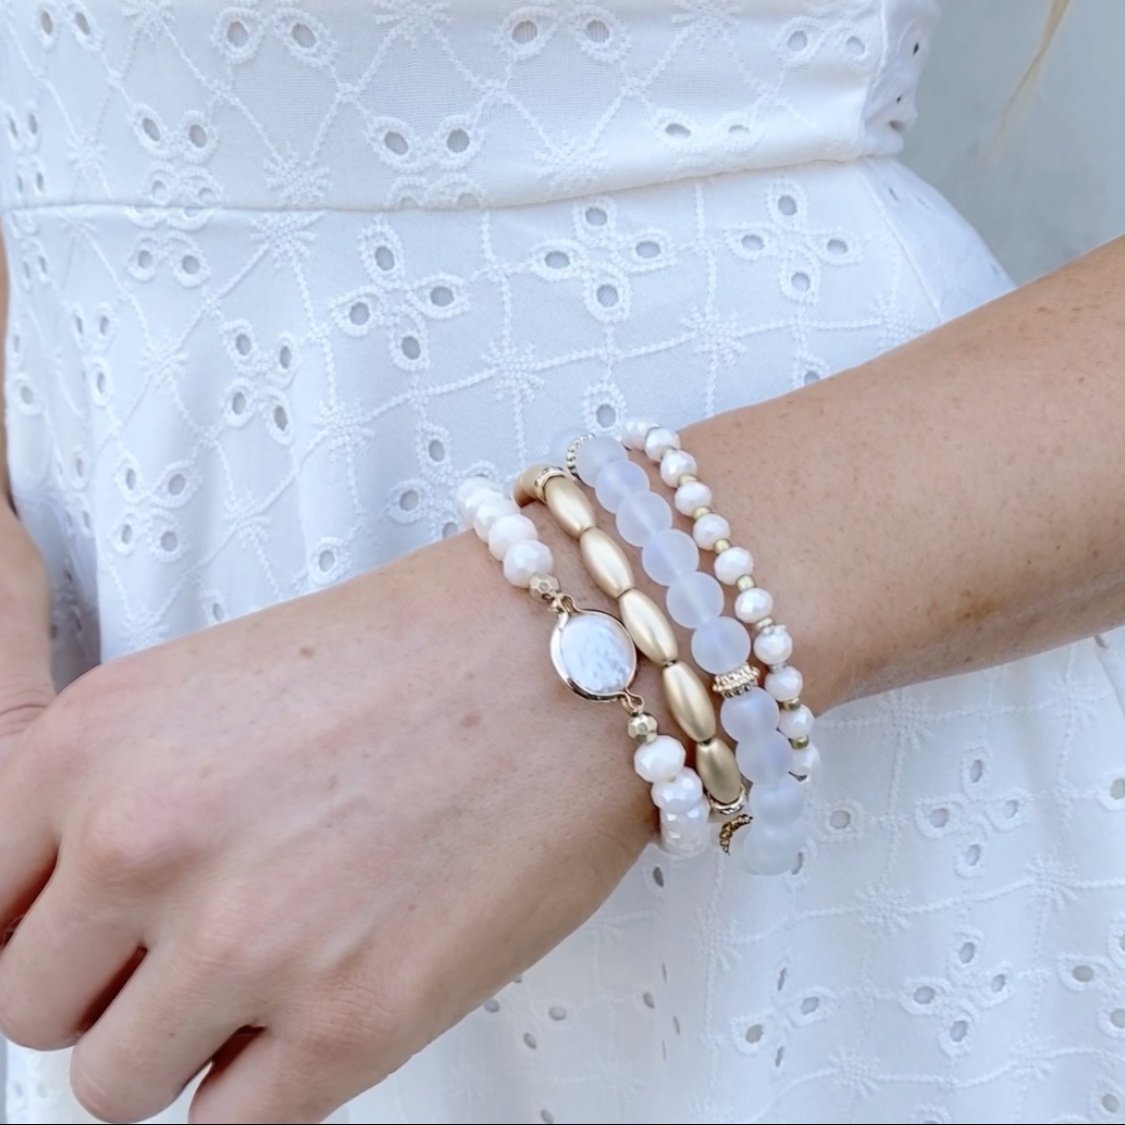 Warm Wishes Bead Bangle Bracelet Set in Gold & Cream - Dainty Hooligan